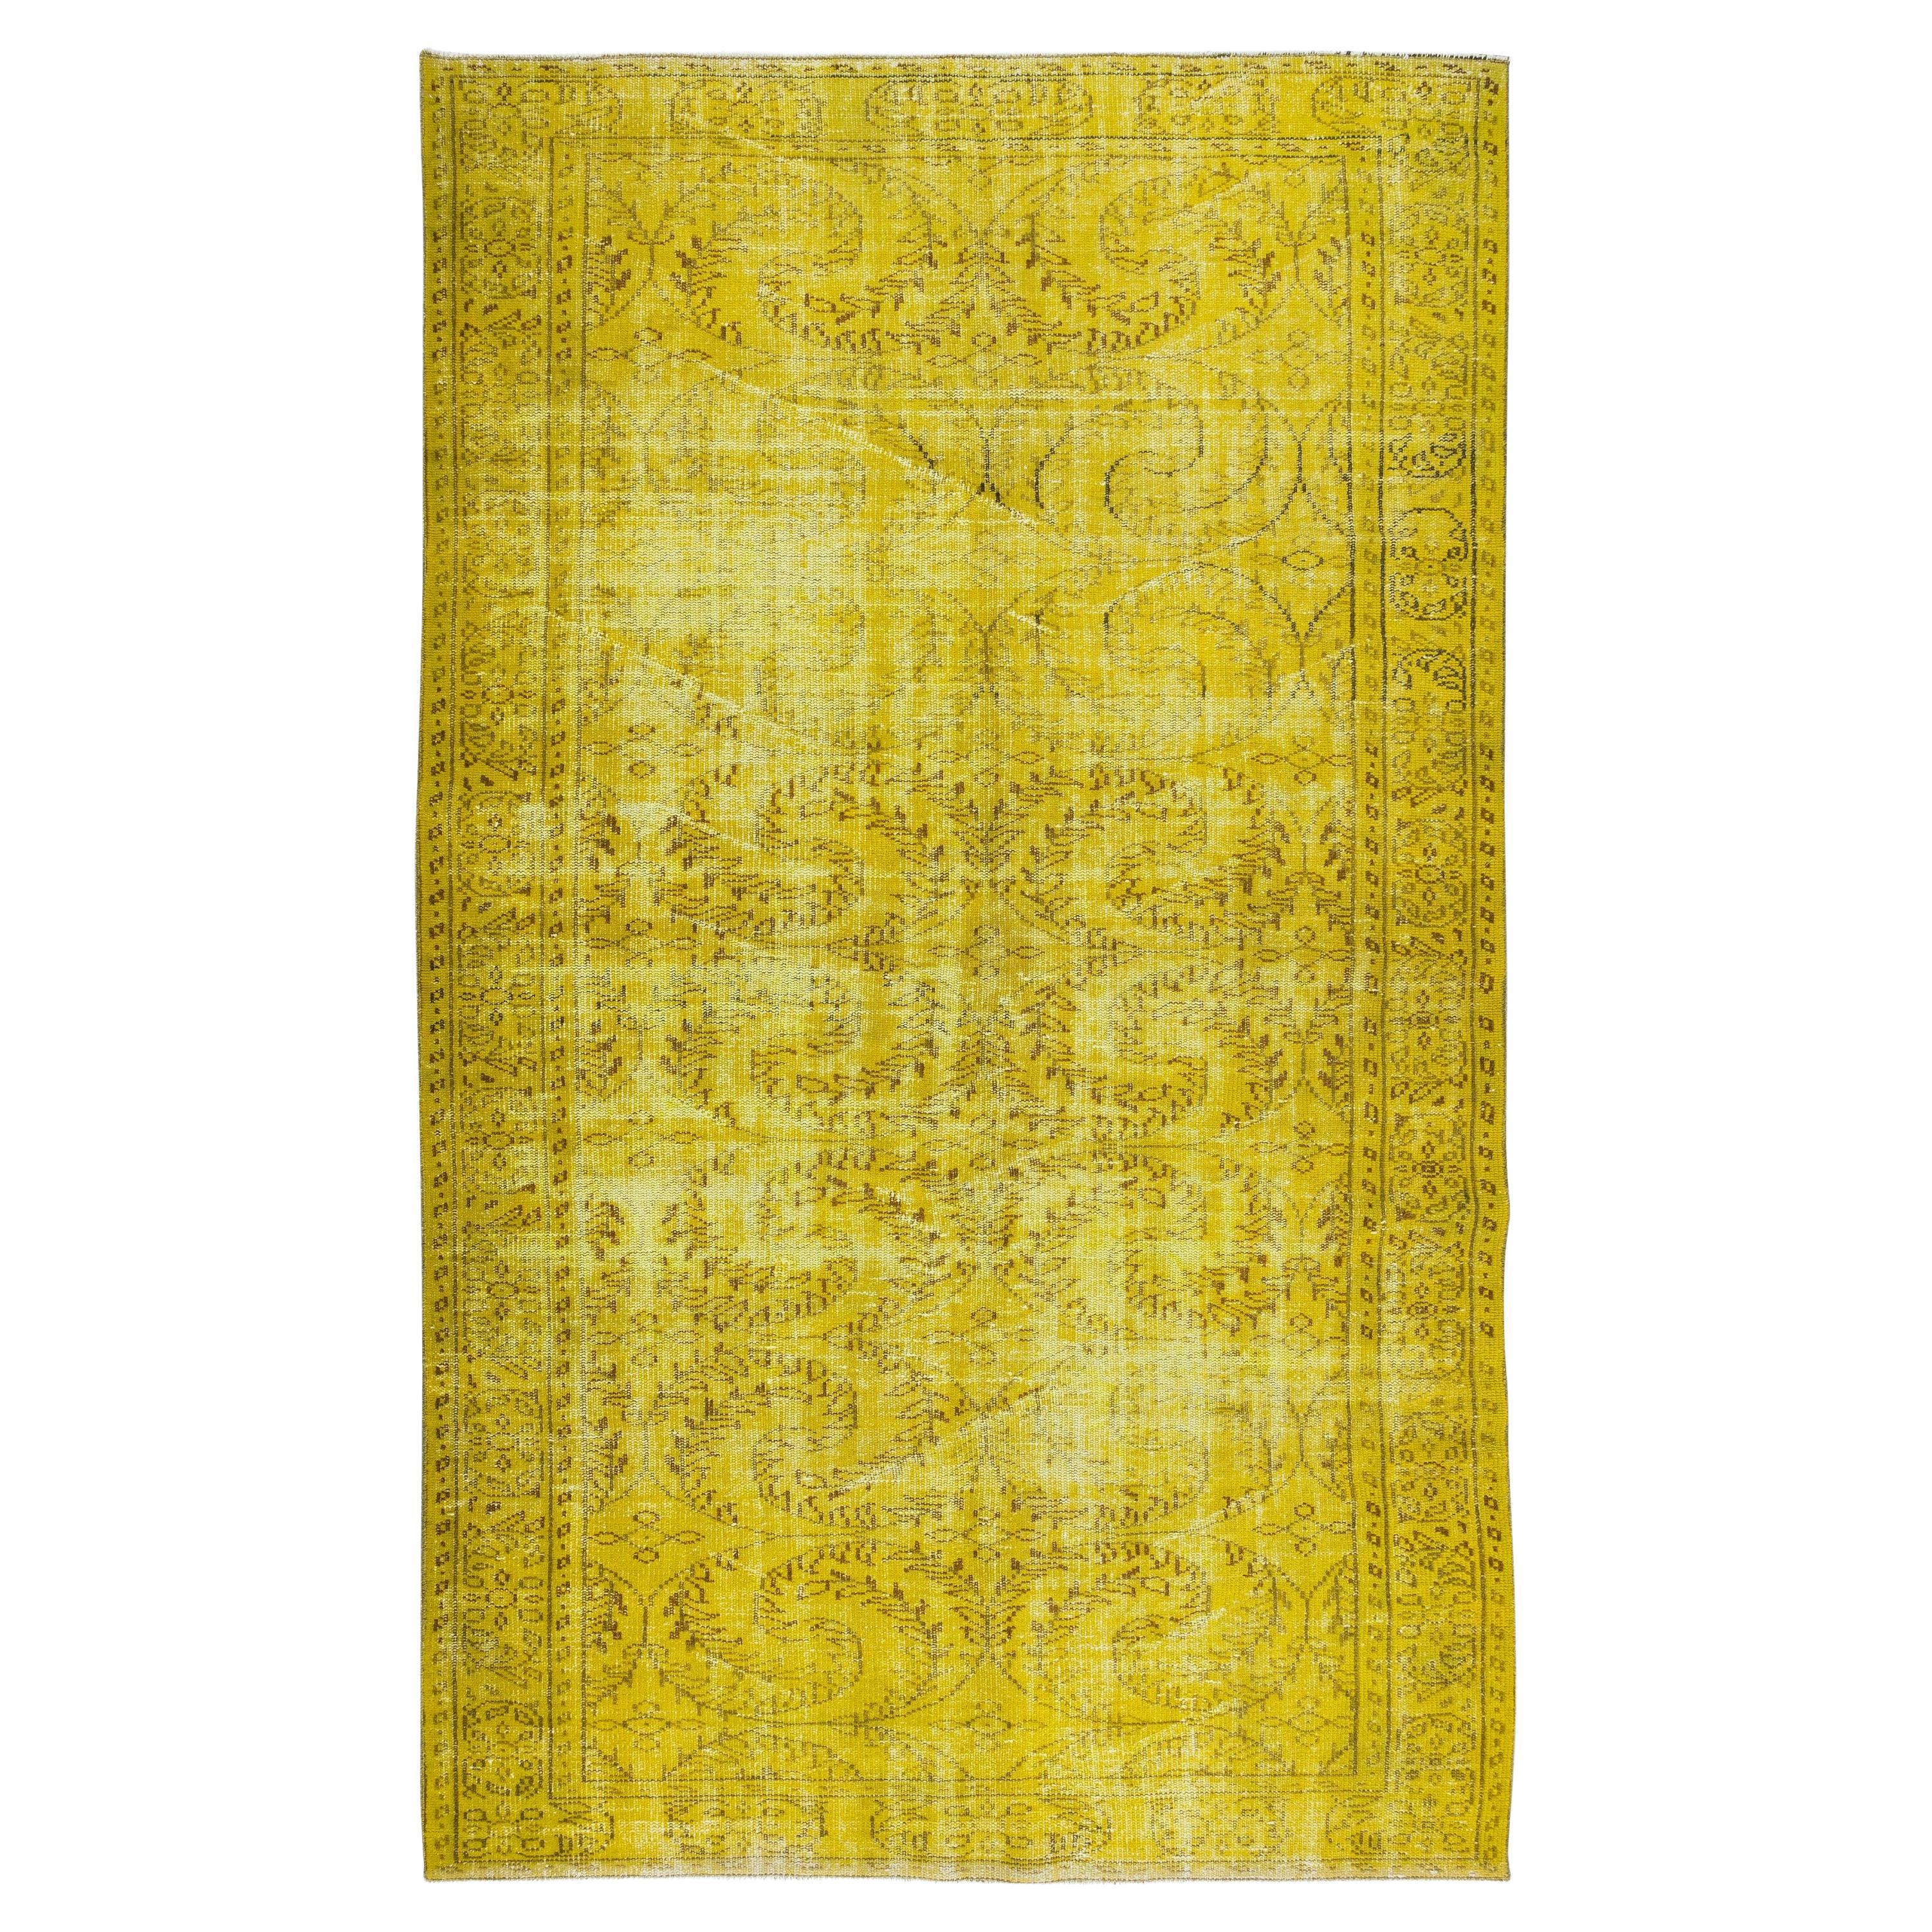 5.7x9.6 Ft Handmade Yellow Overdyed Rug, Vintage Decorative Carpet From Turkey